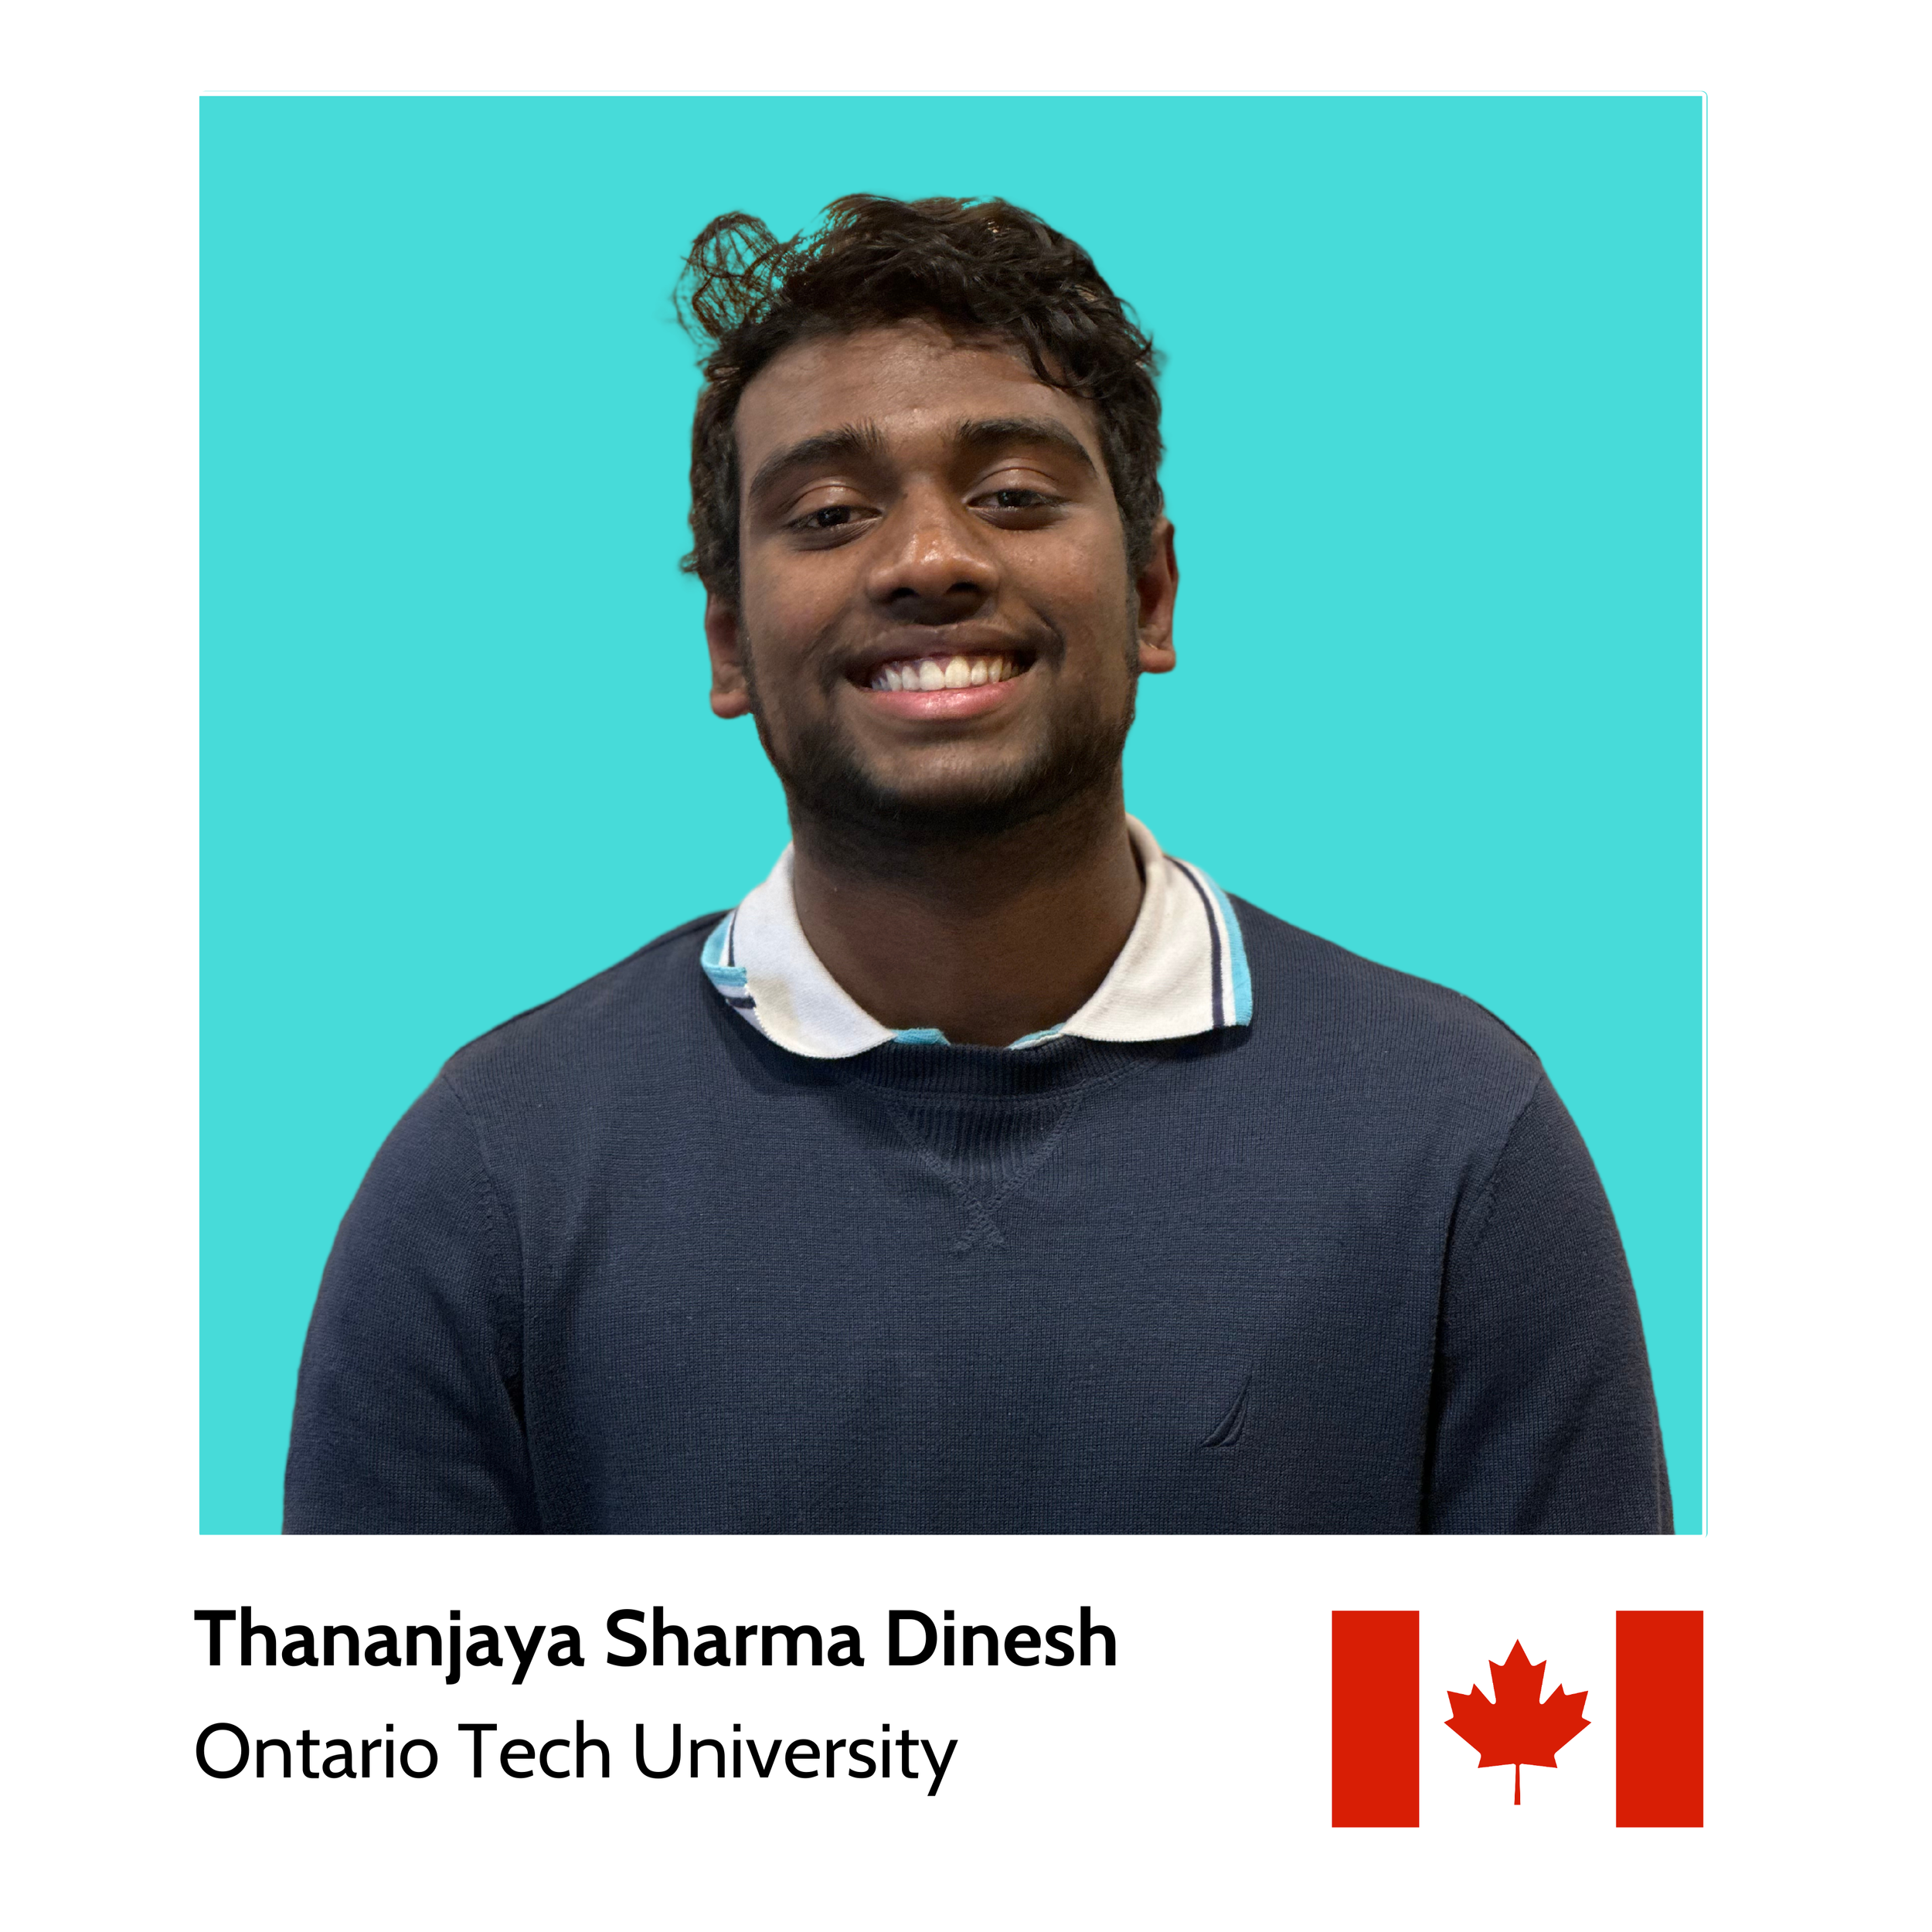 Your_Big_Year_ibm_z_student_ambassador_Thananjaya Sharma Dinesh_Ontario Tech University.png